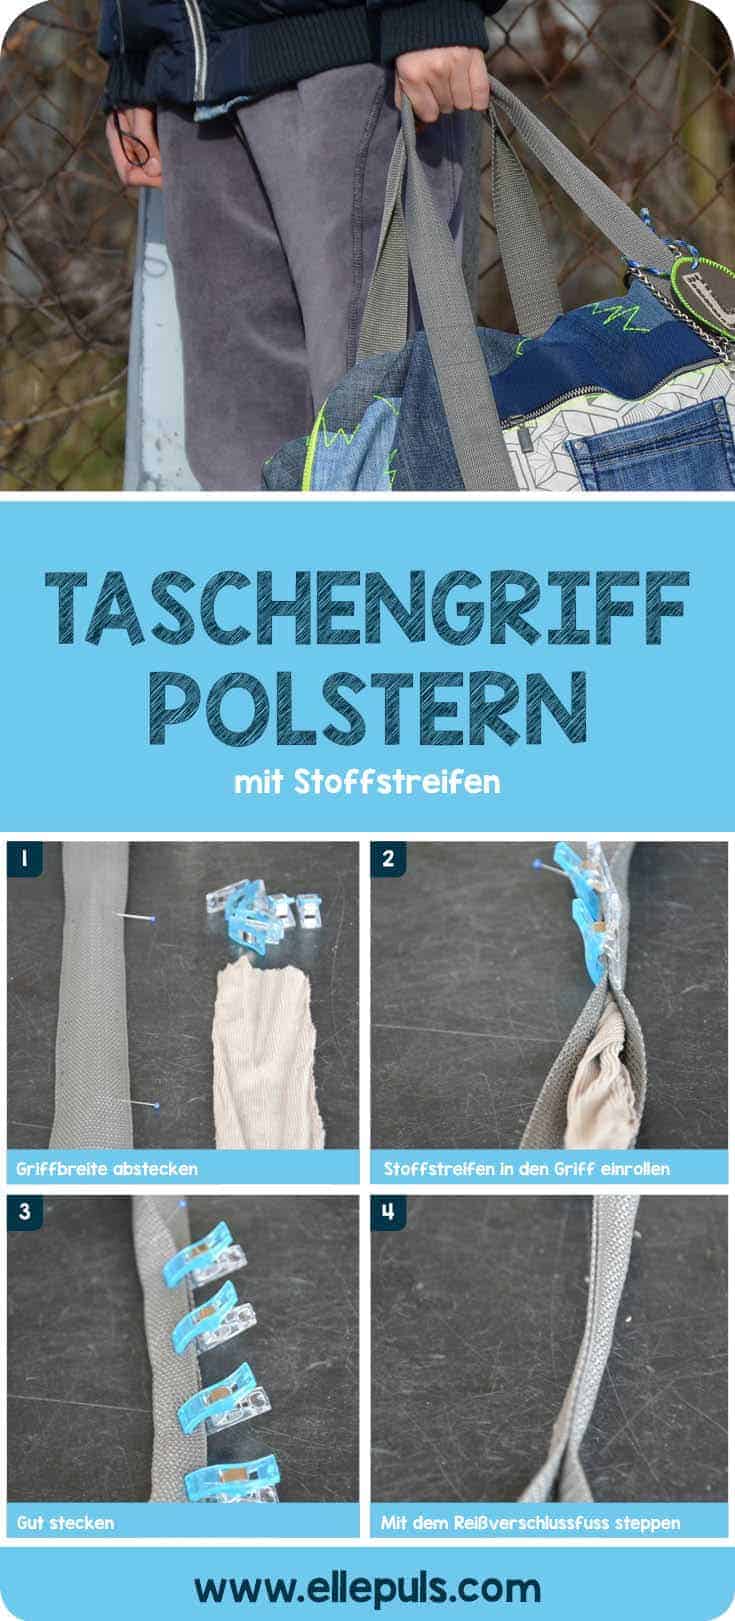 Taschengriff_polstern_Weekender